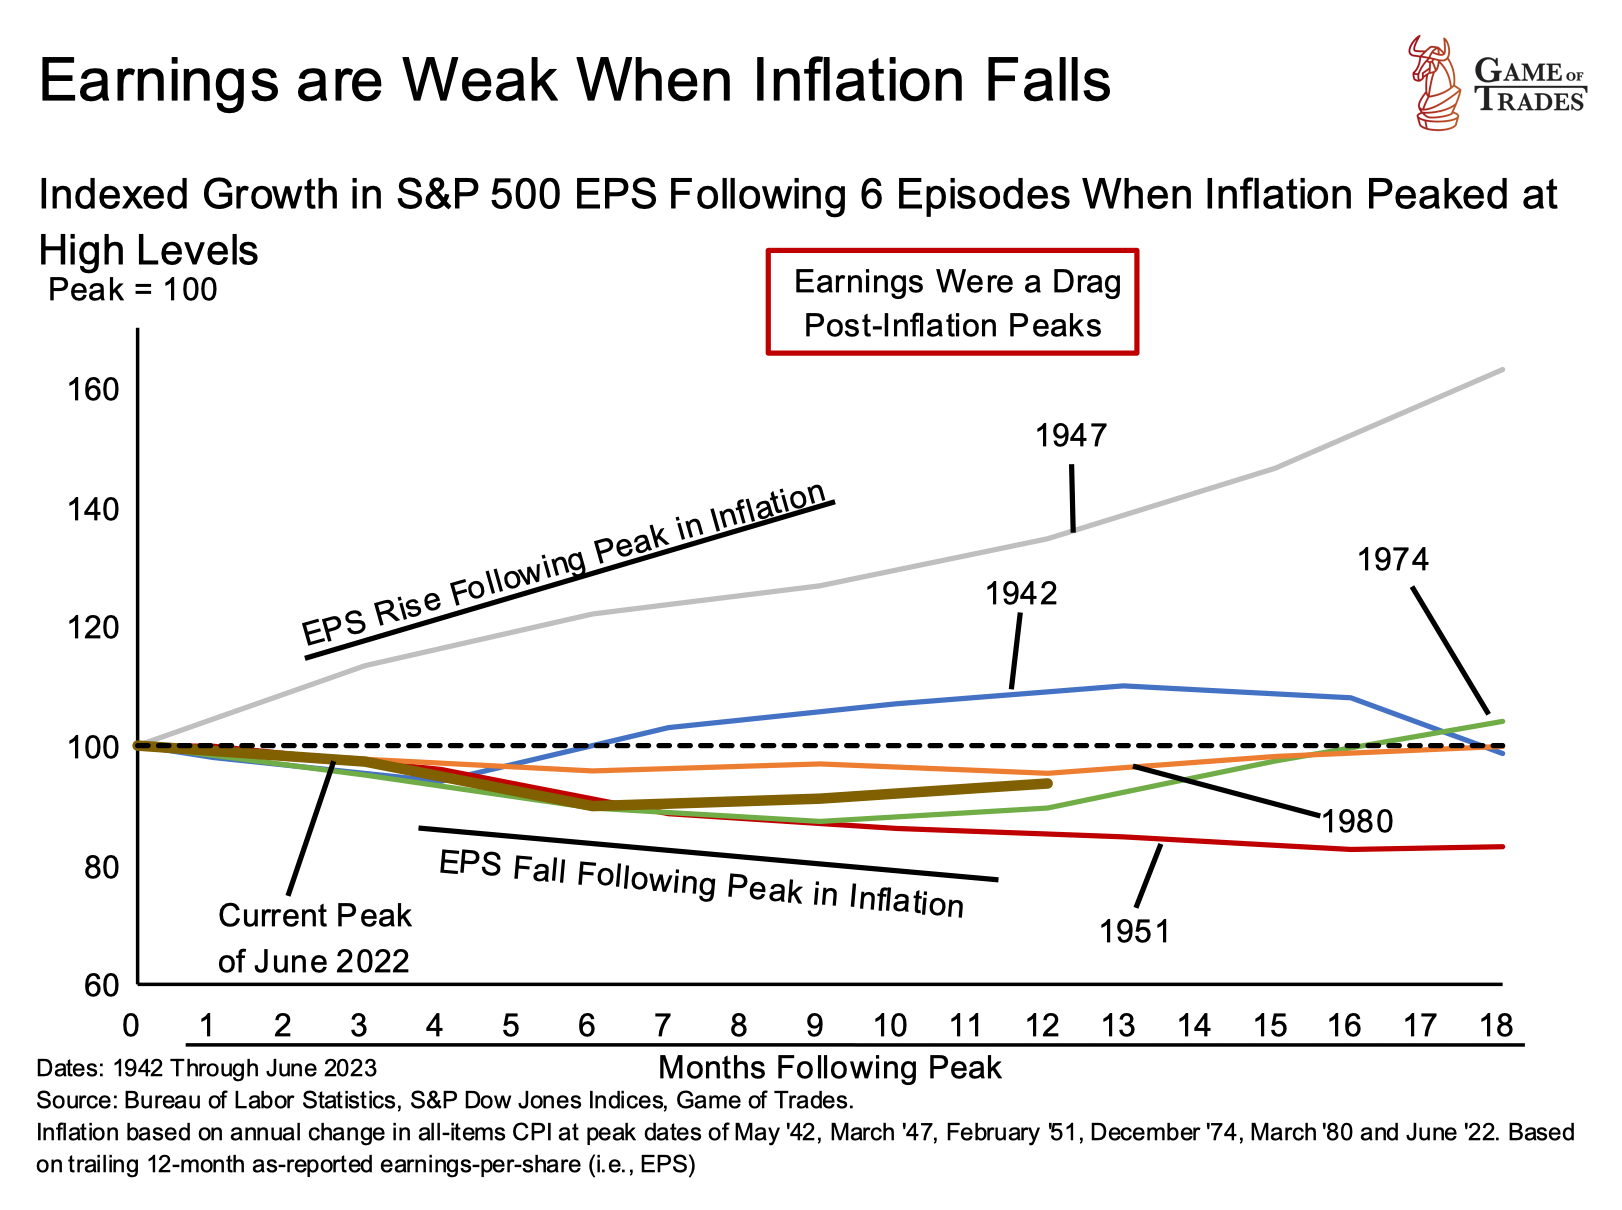 Inflation Falls